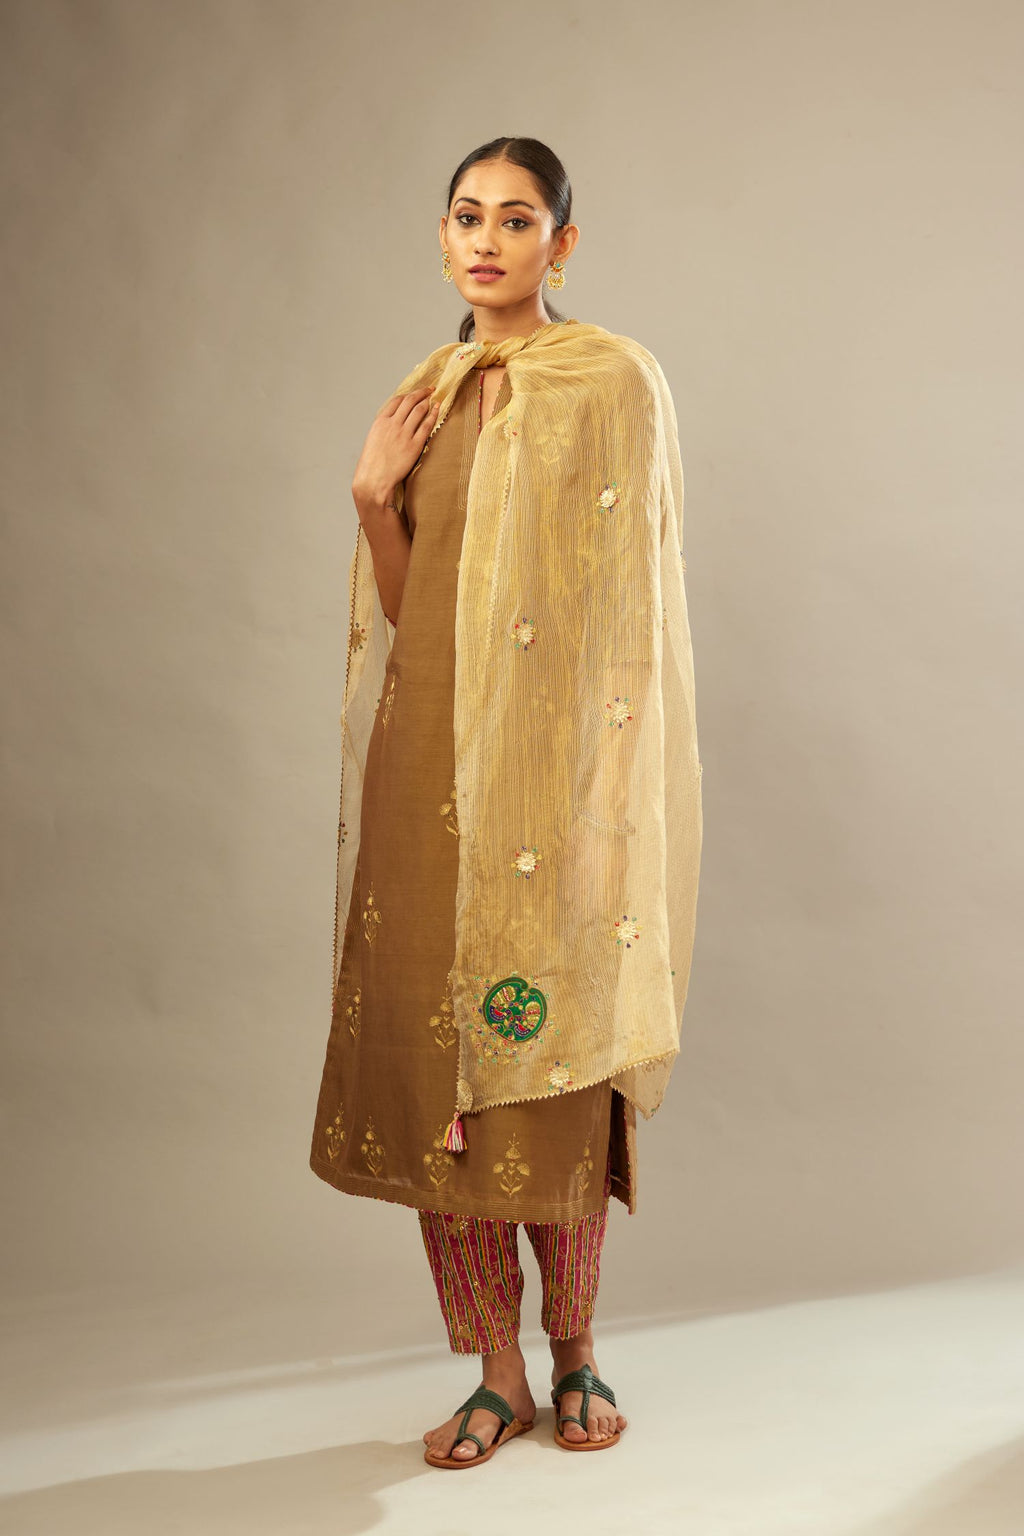 Olive silk chanderi kurta set with golden zari embroidery bootas all over the kurtaand quilted edges.